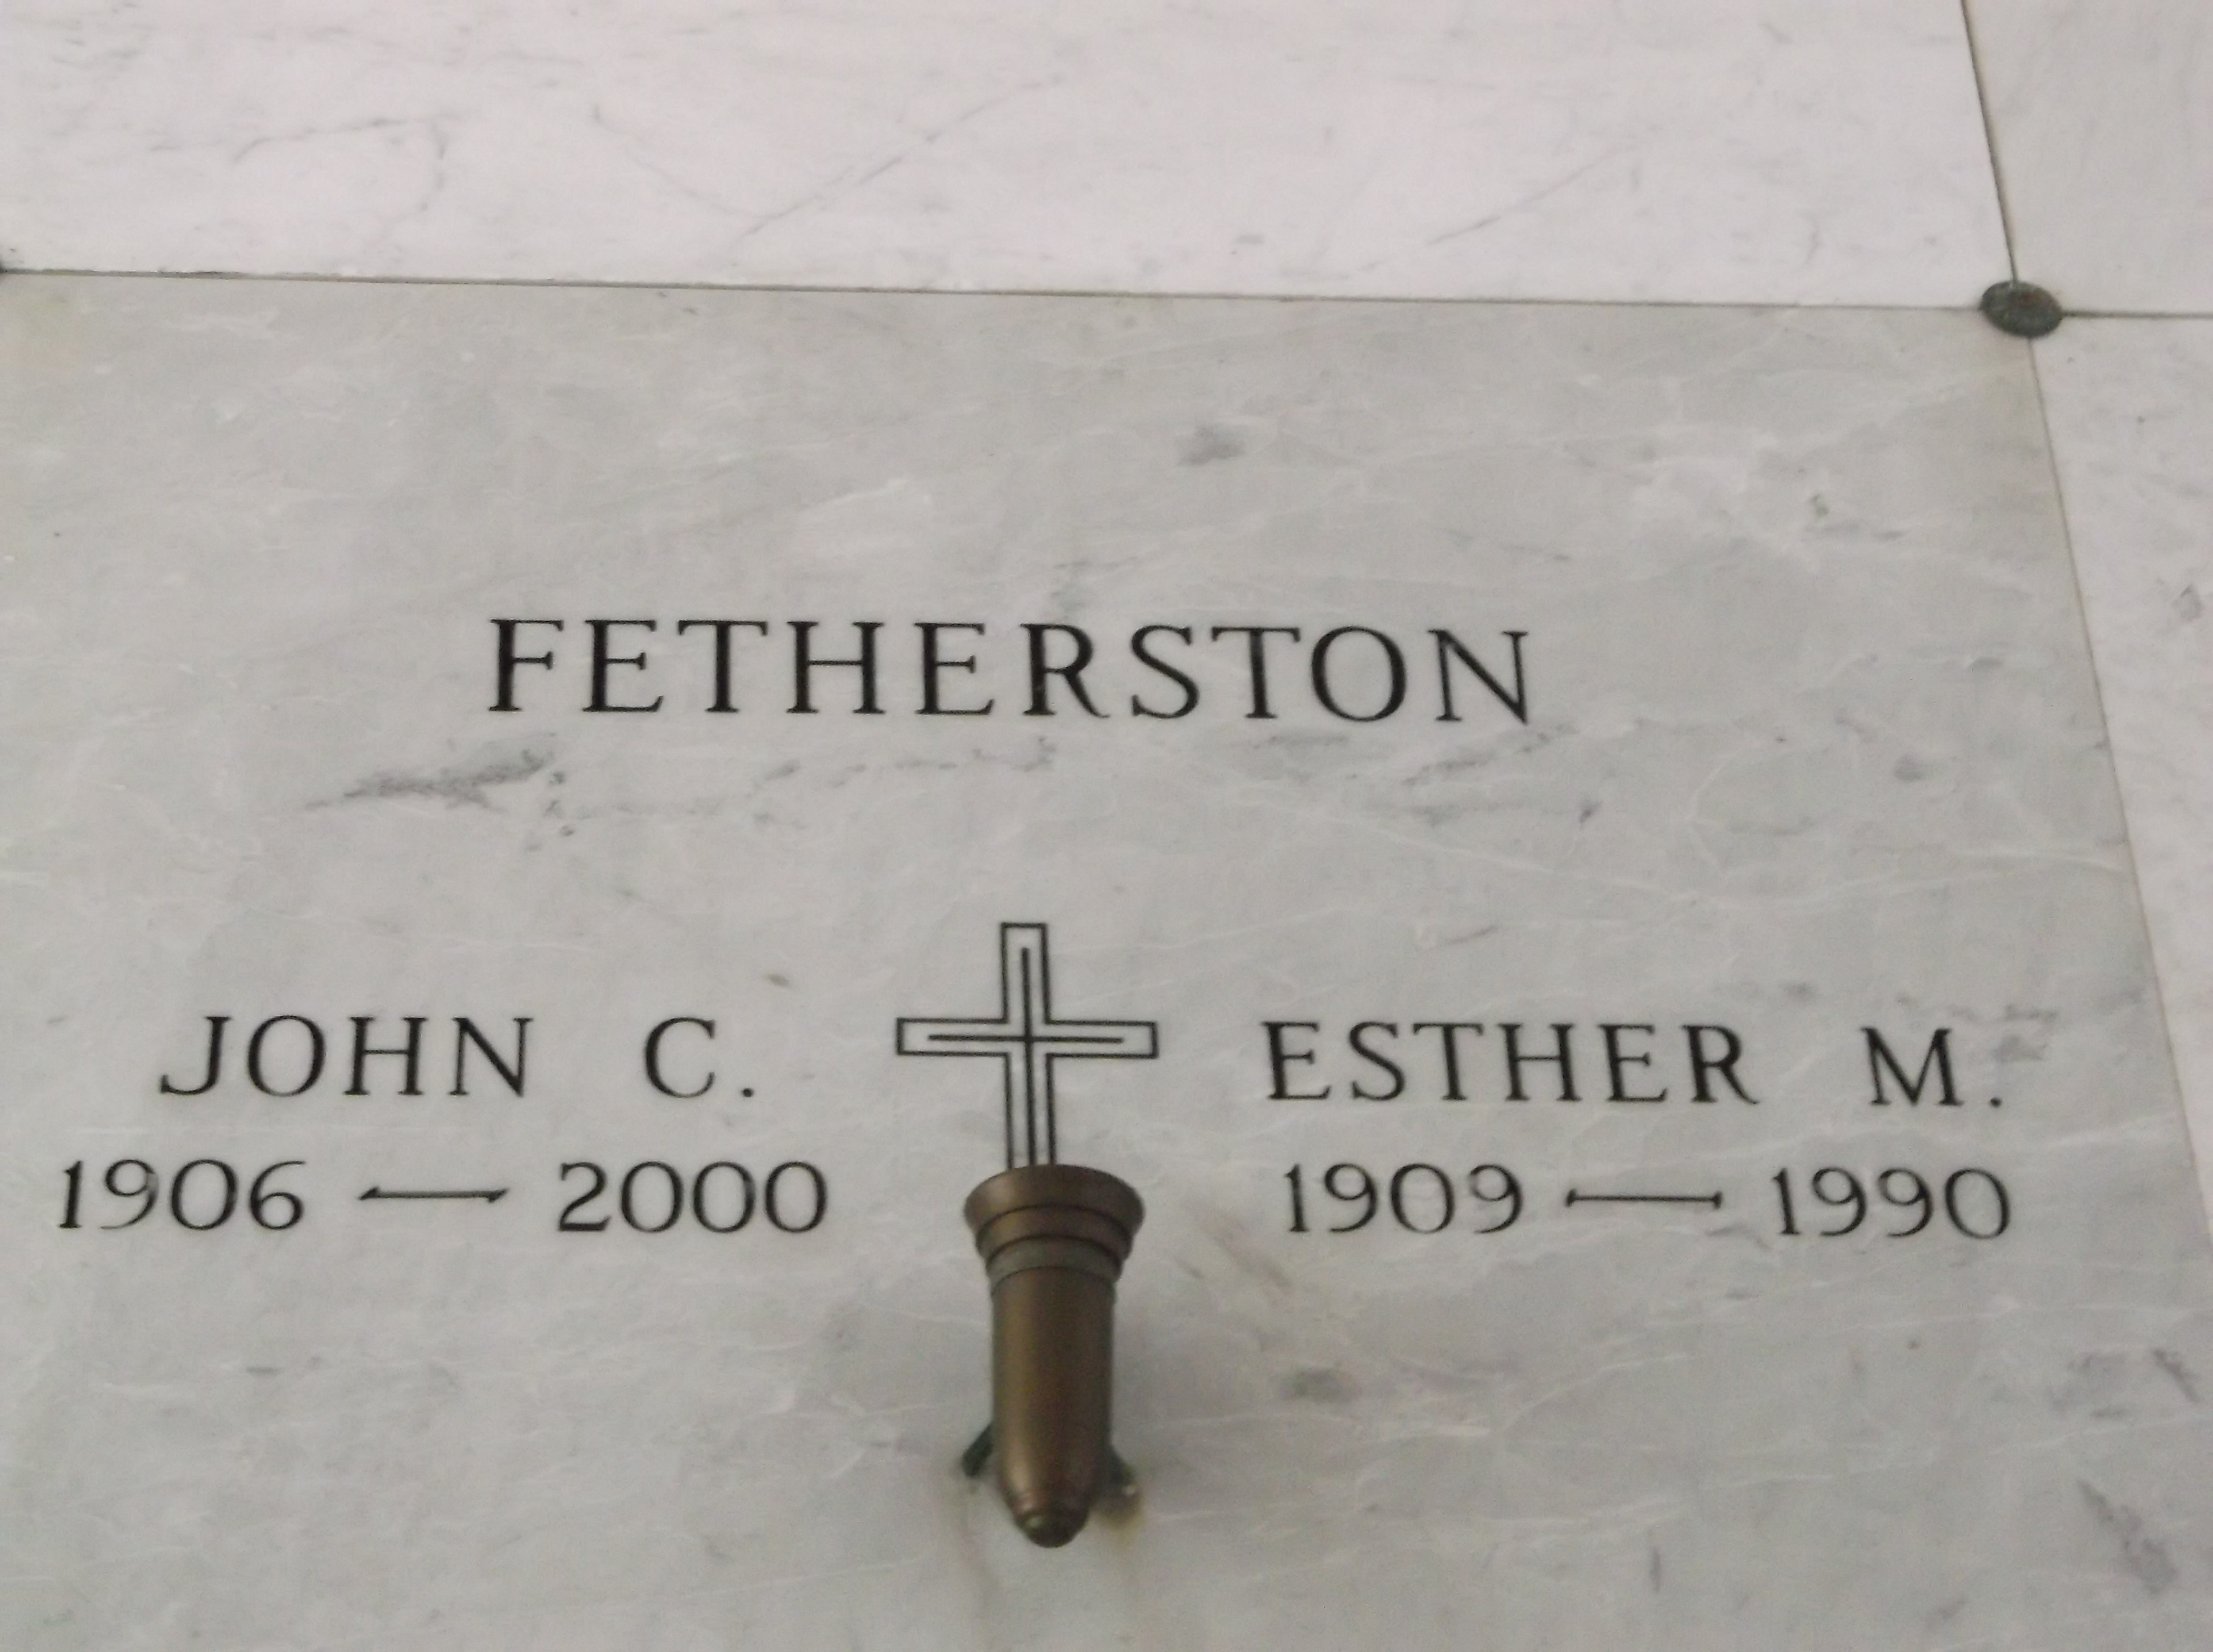 John C Fetherston